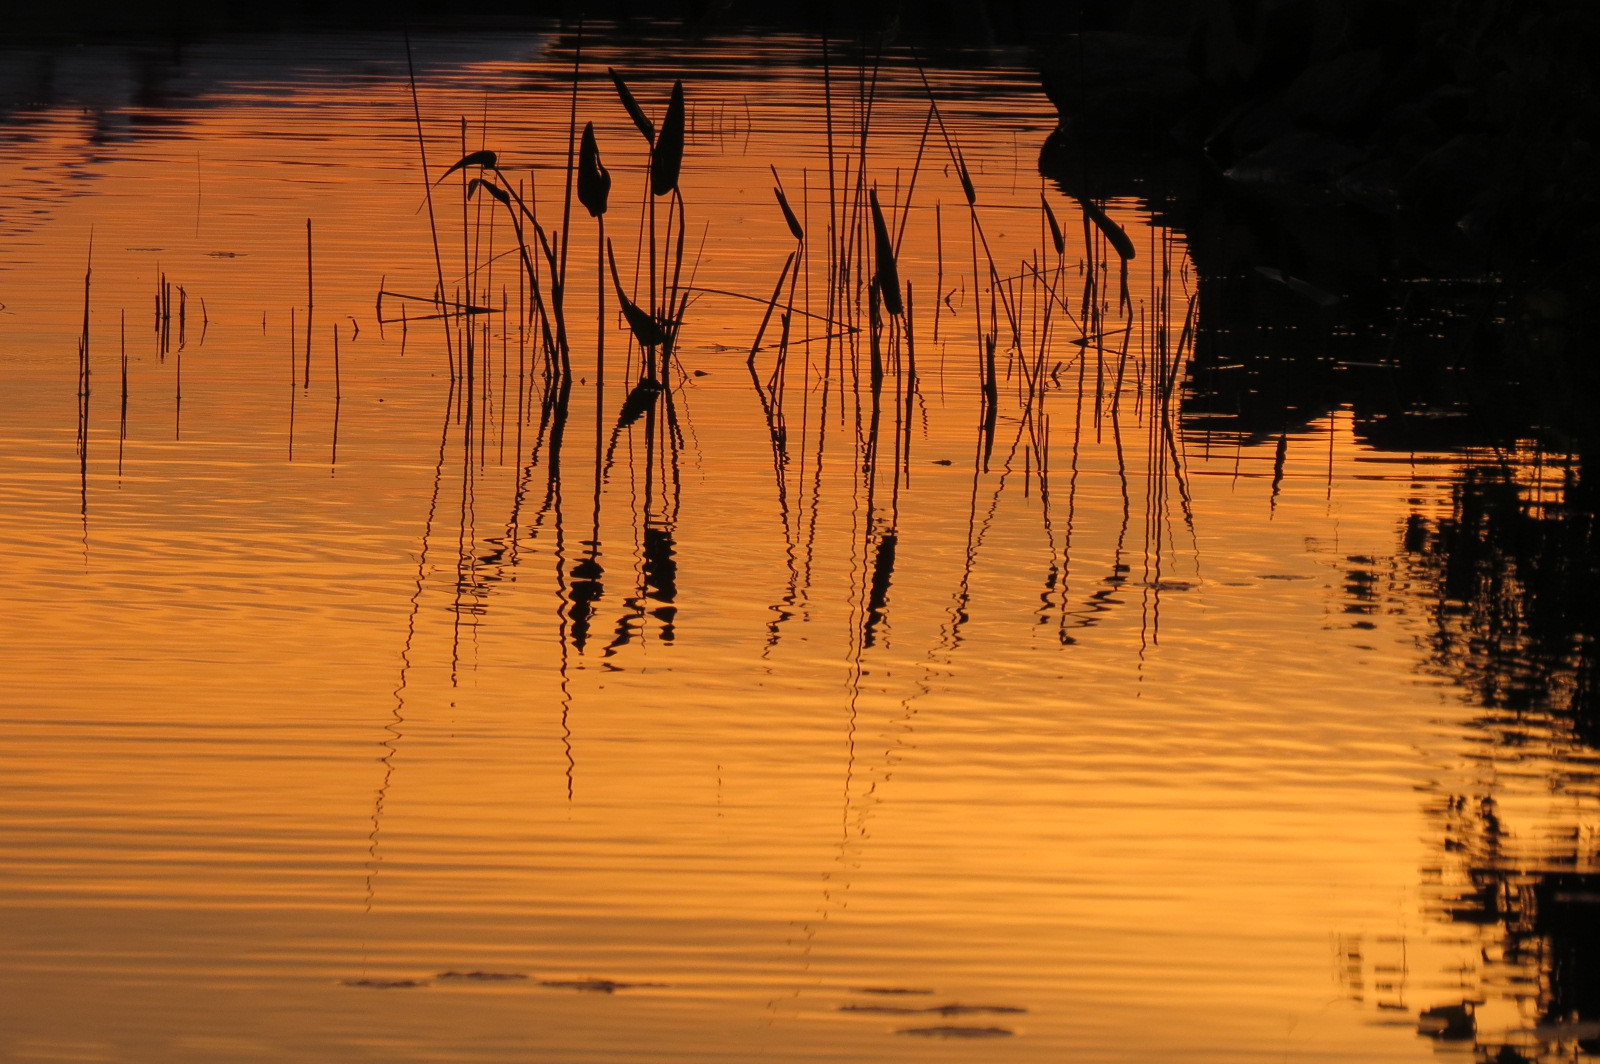 Sheila-Waller-Reflections-at-Sunset